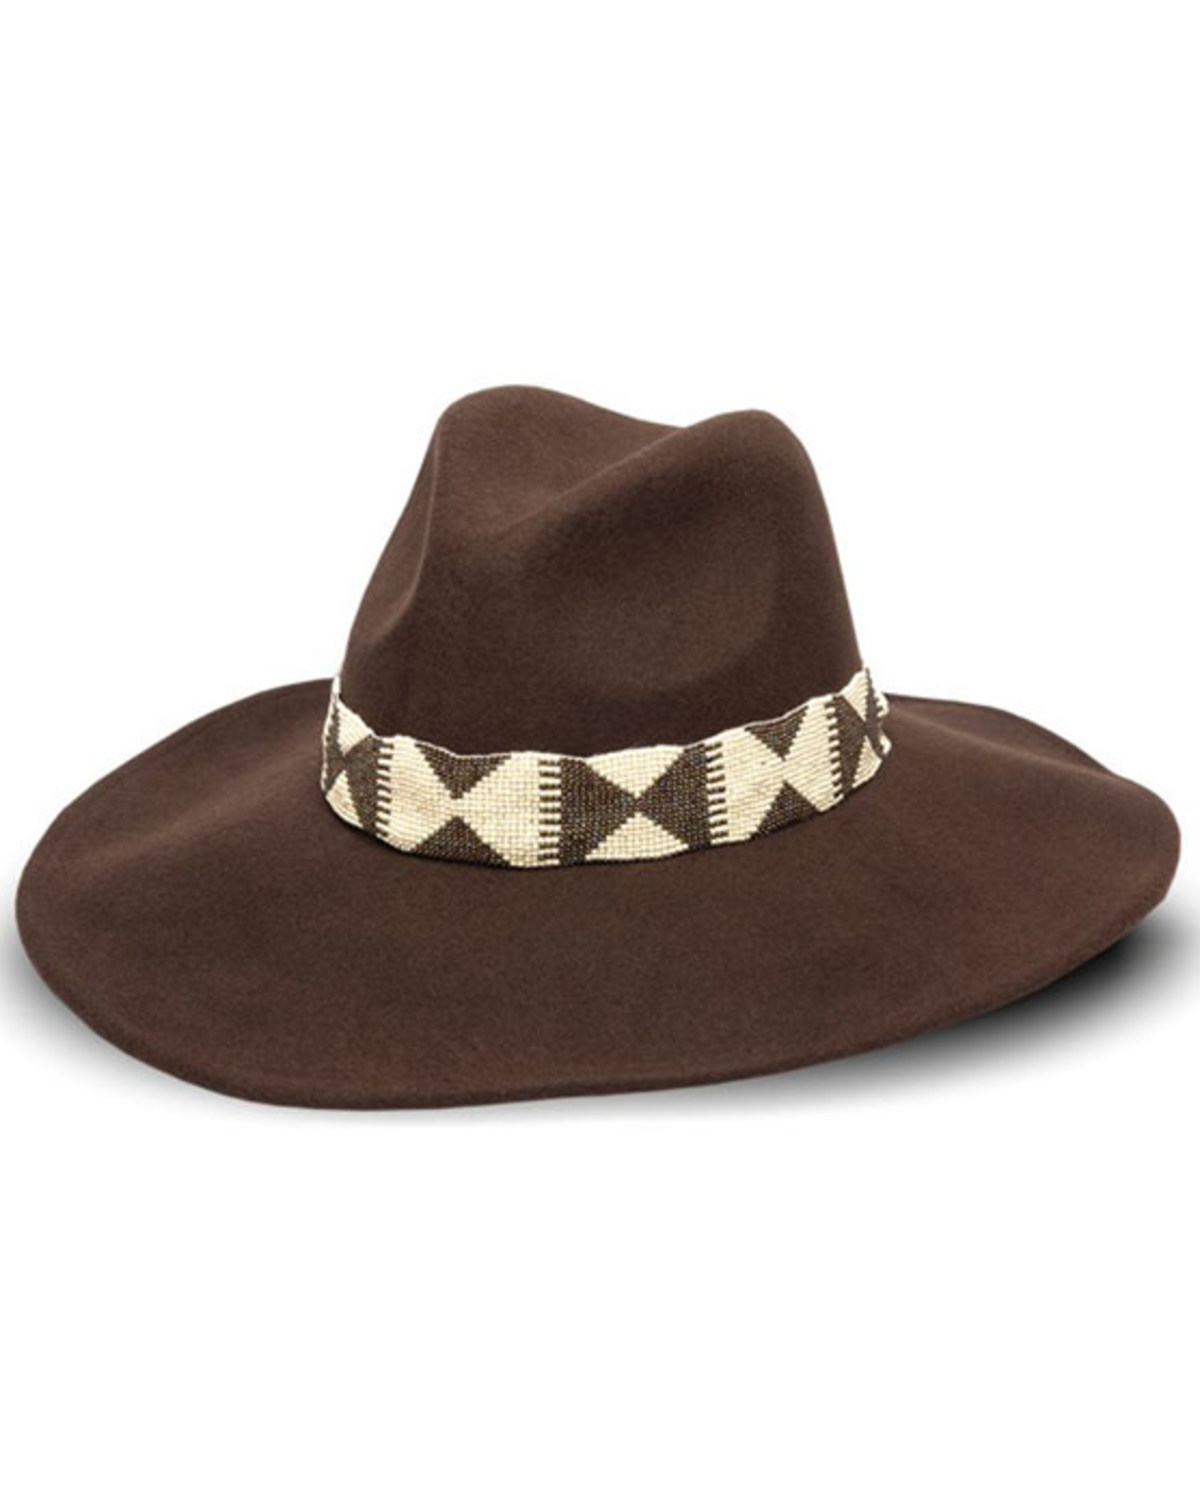 Nikki Beach Women's Bonsoa Wool Cowboy Hat